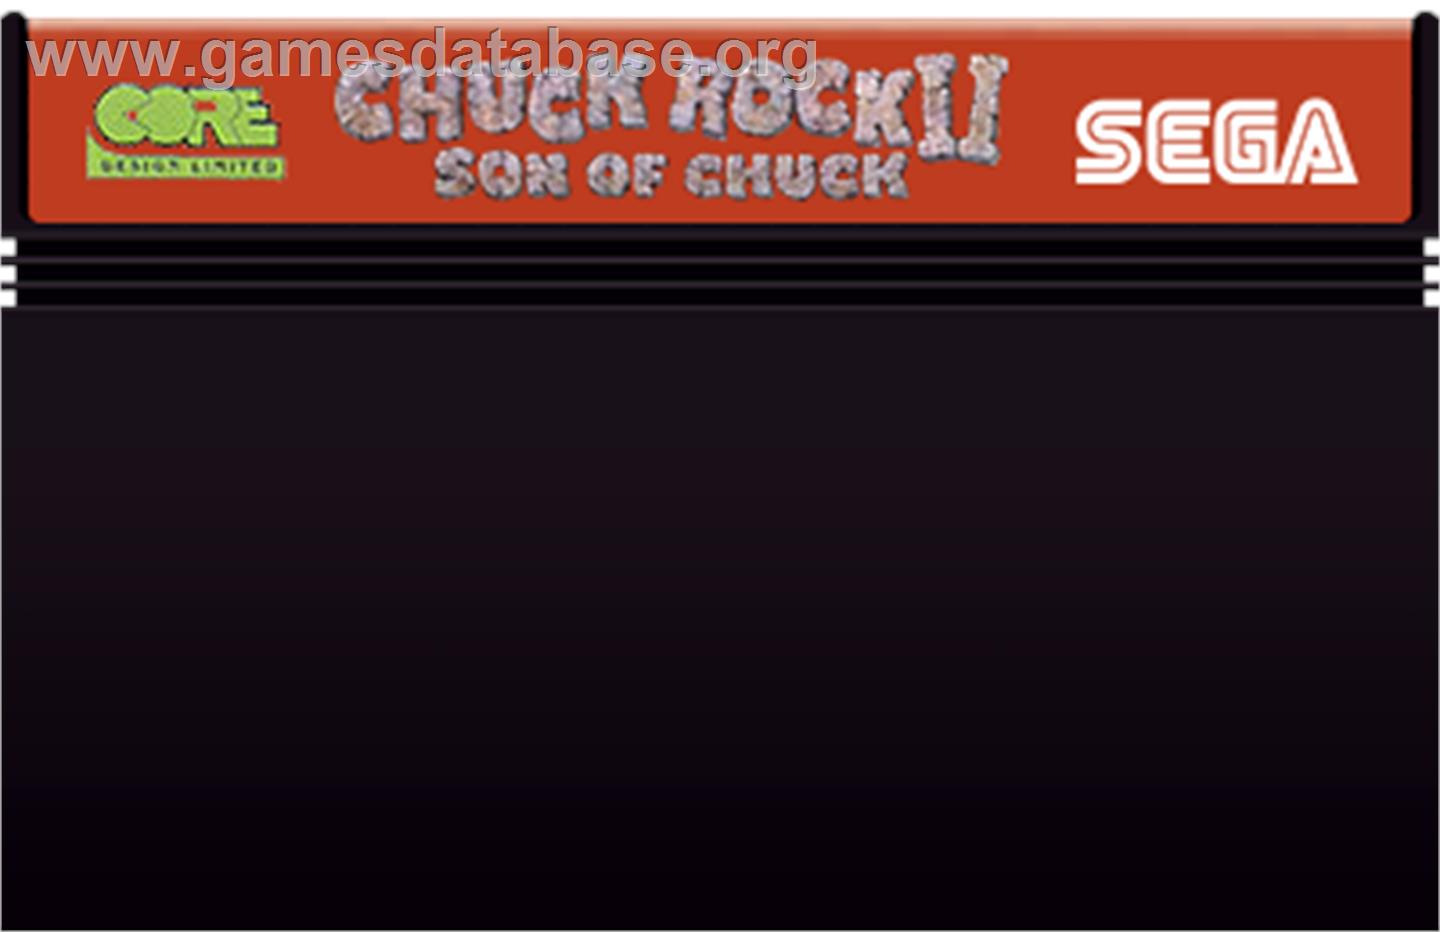 Chuck Rock 2: Son of Chuck - Sega Master System - Artwork - Cartridge